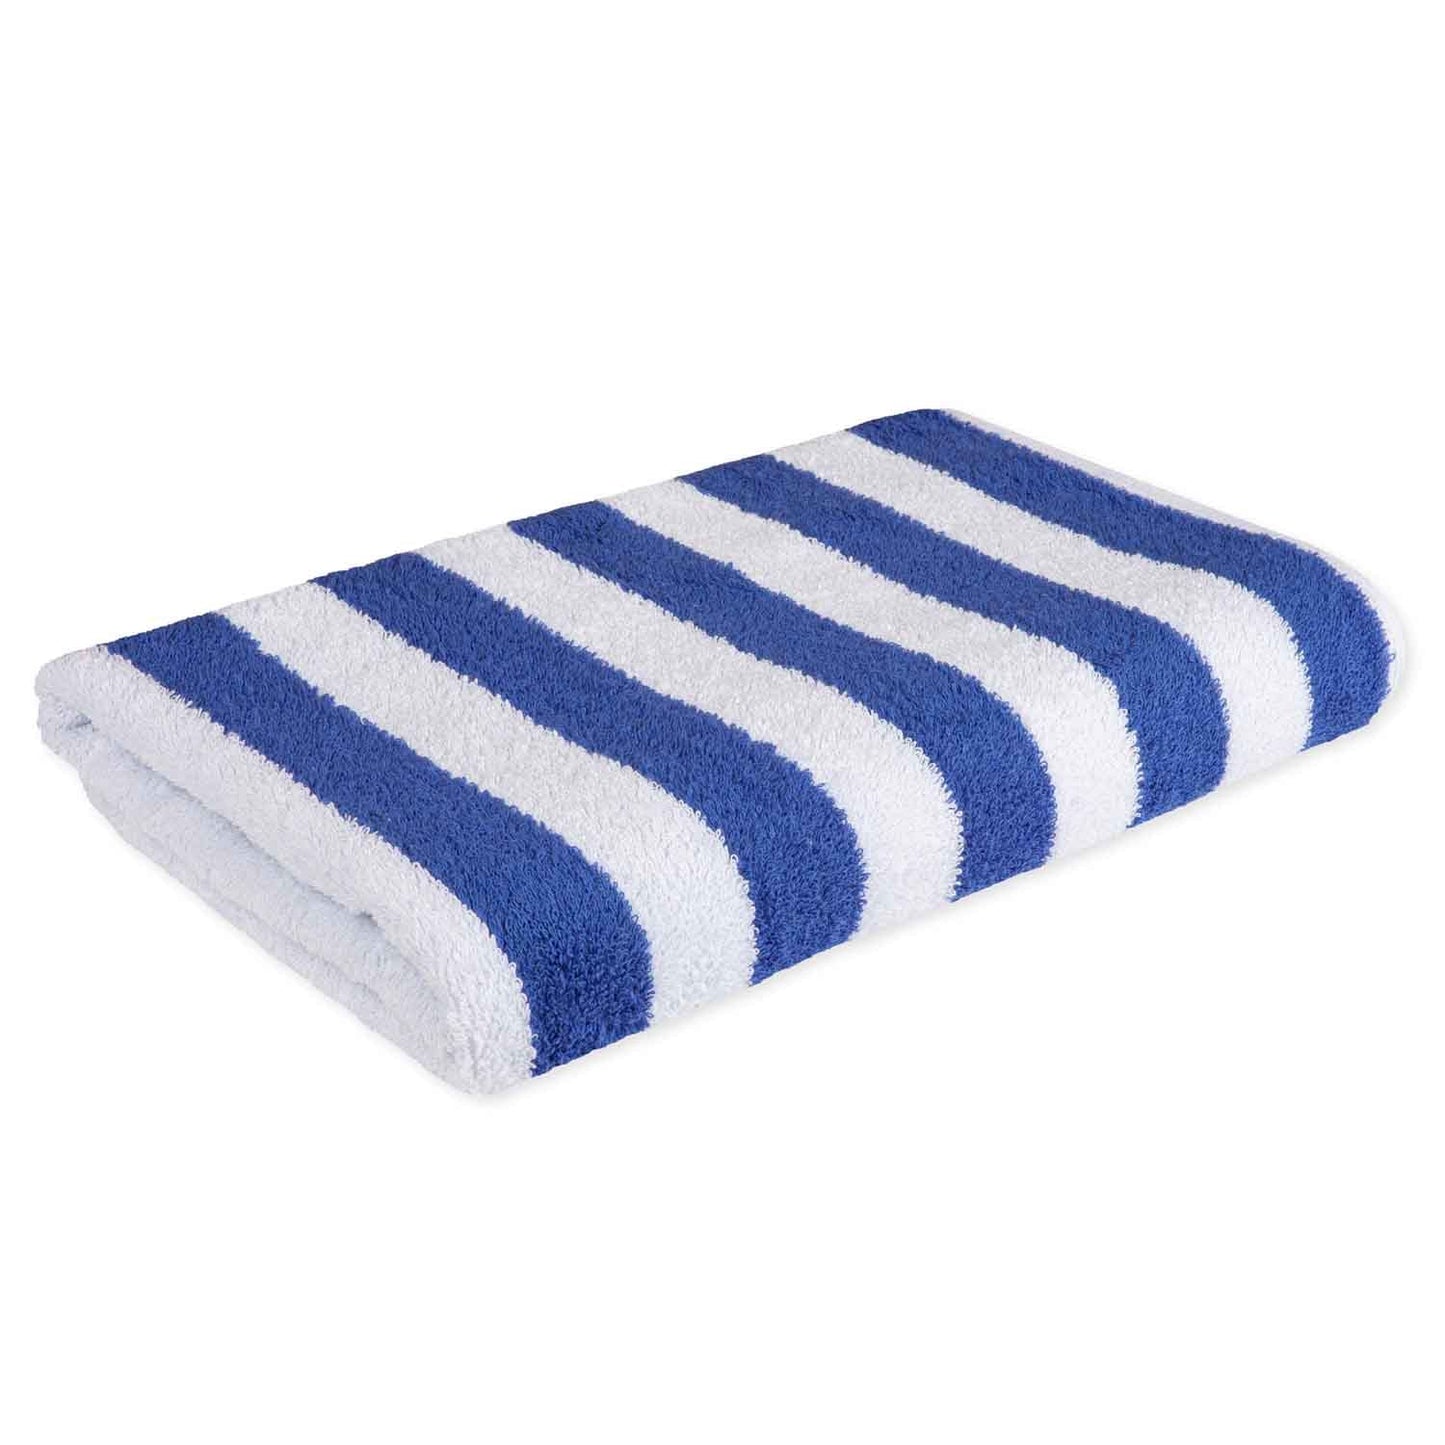 American Dawn | 30X60 Inch Cabana Stripe Blue With White Stripes Hotel Towel | Pool Towel 